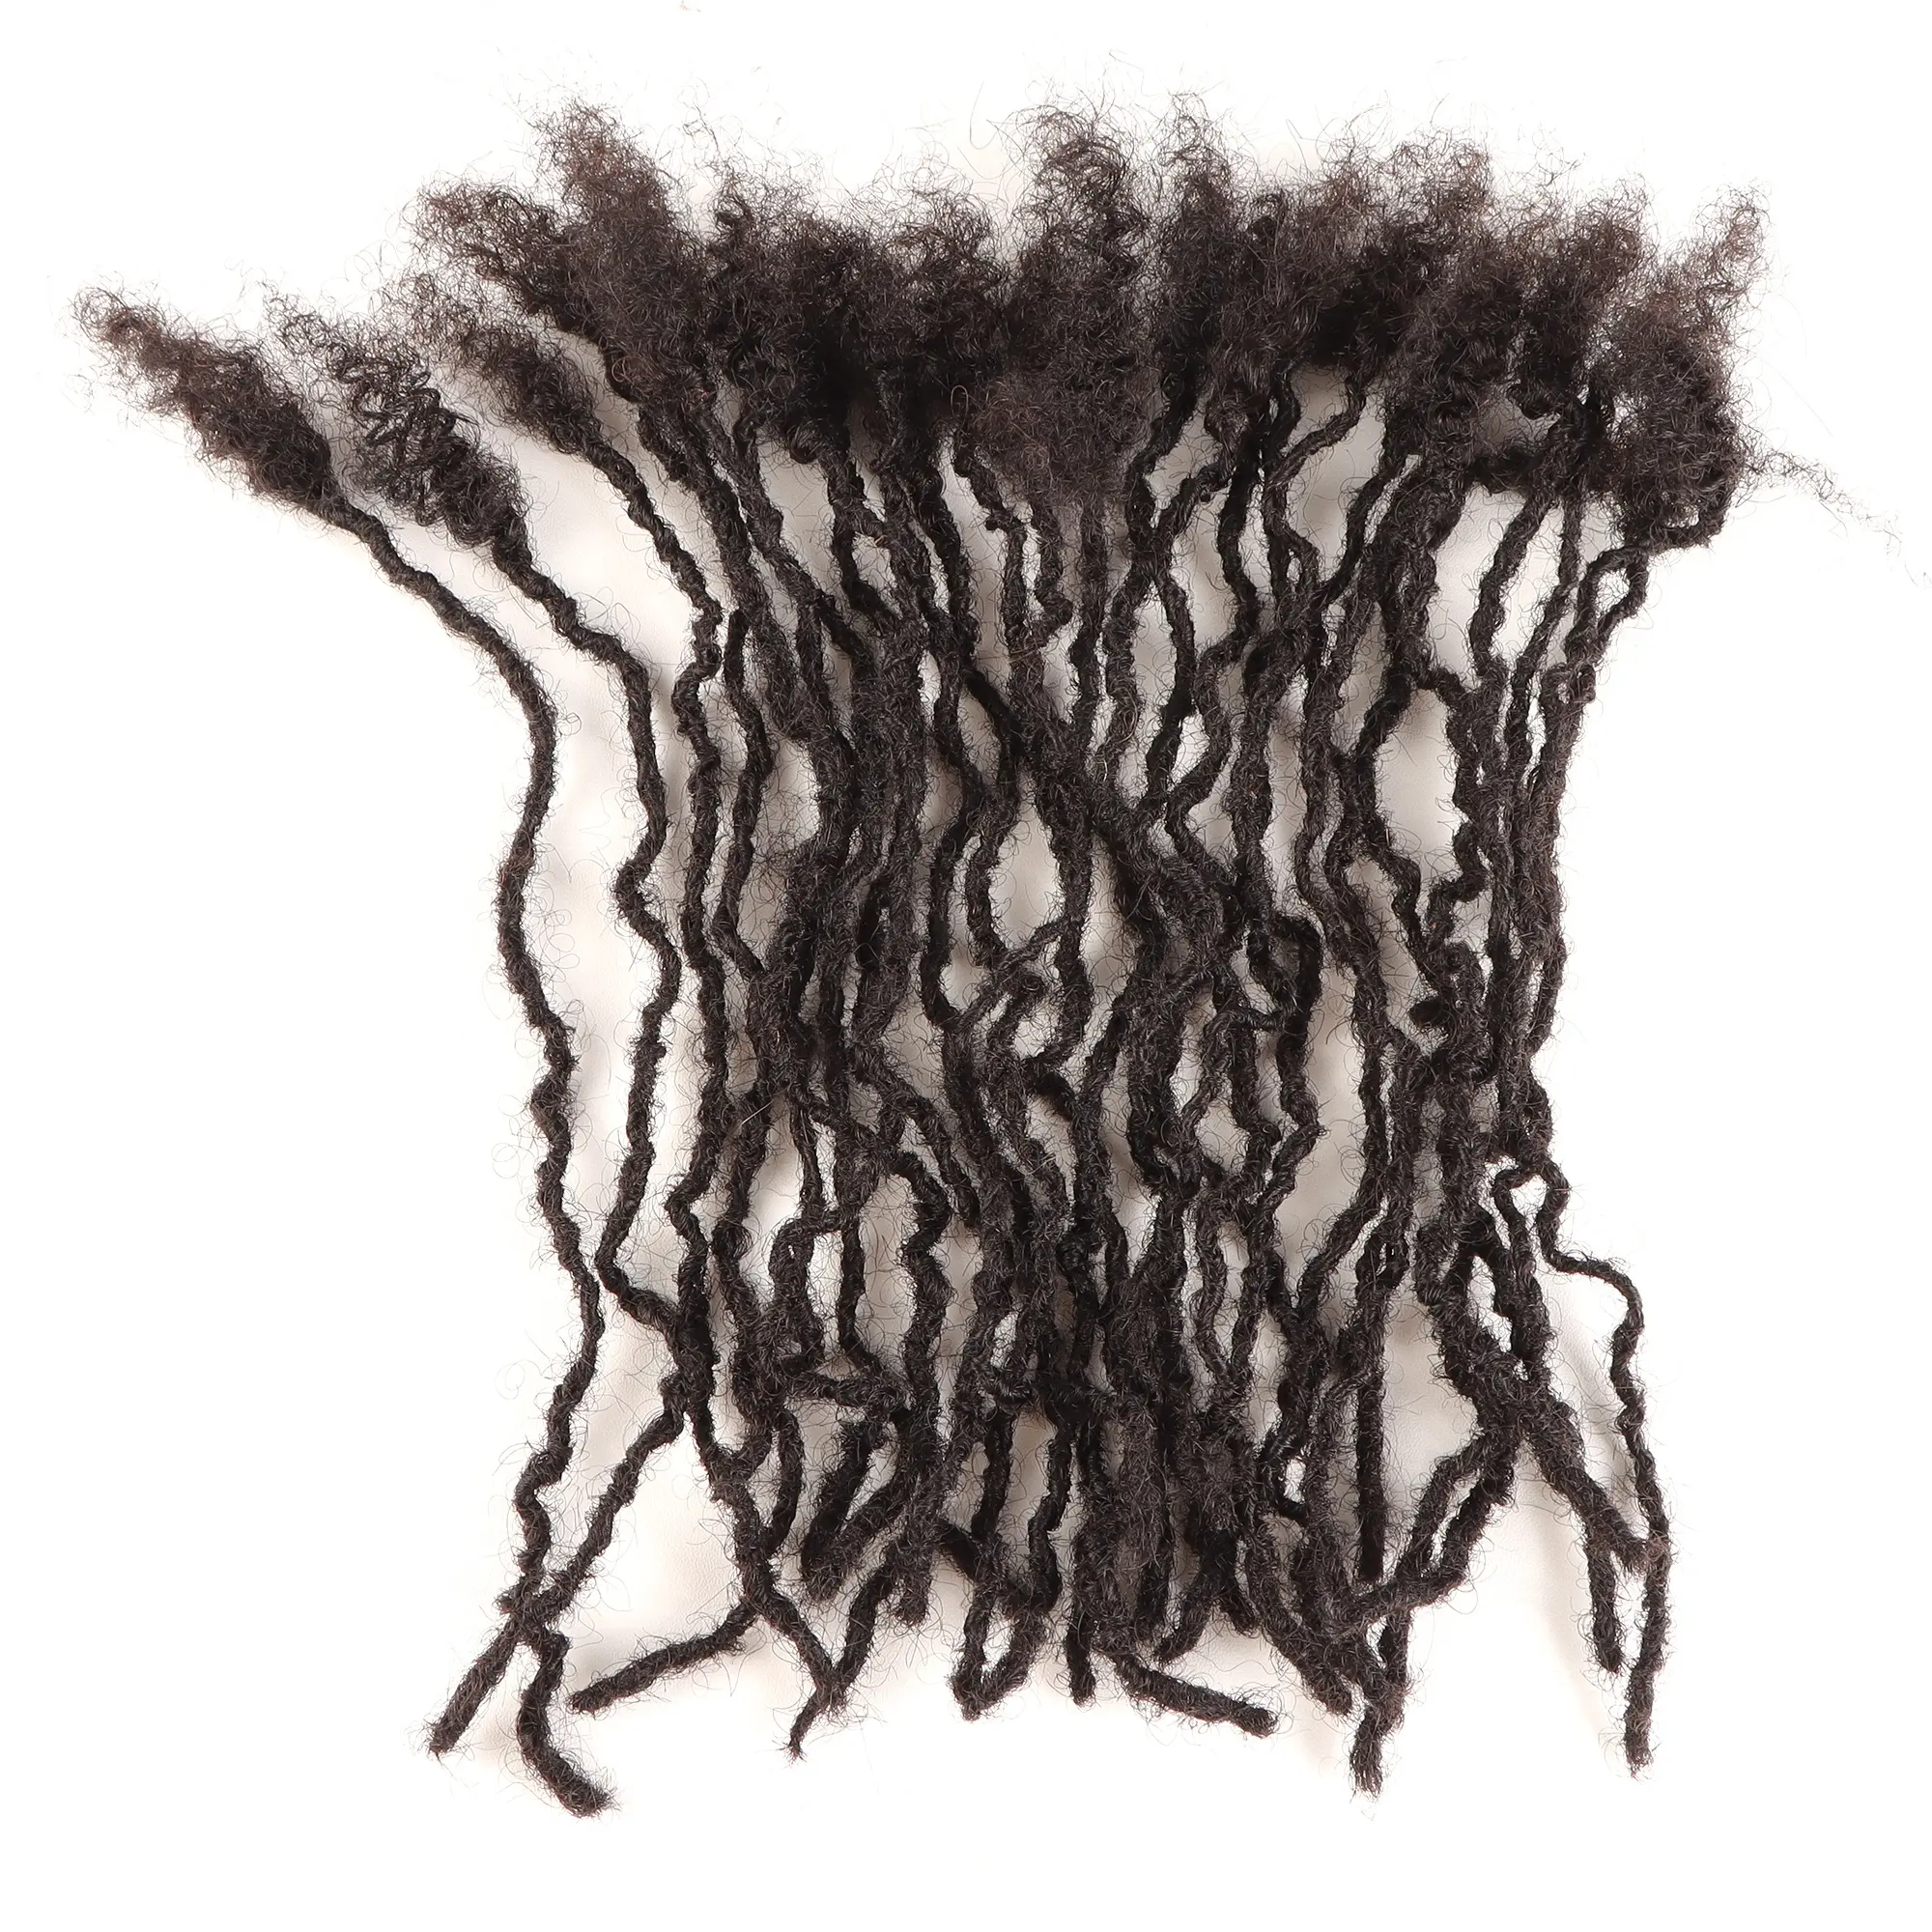 Orientdreads Interlocks Human hair Microlocks, Sisterlocks extensions 0.2-0.3cm